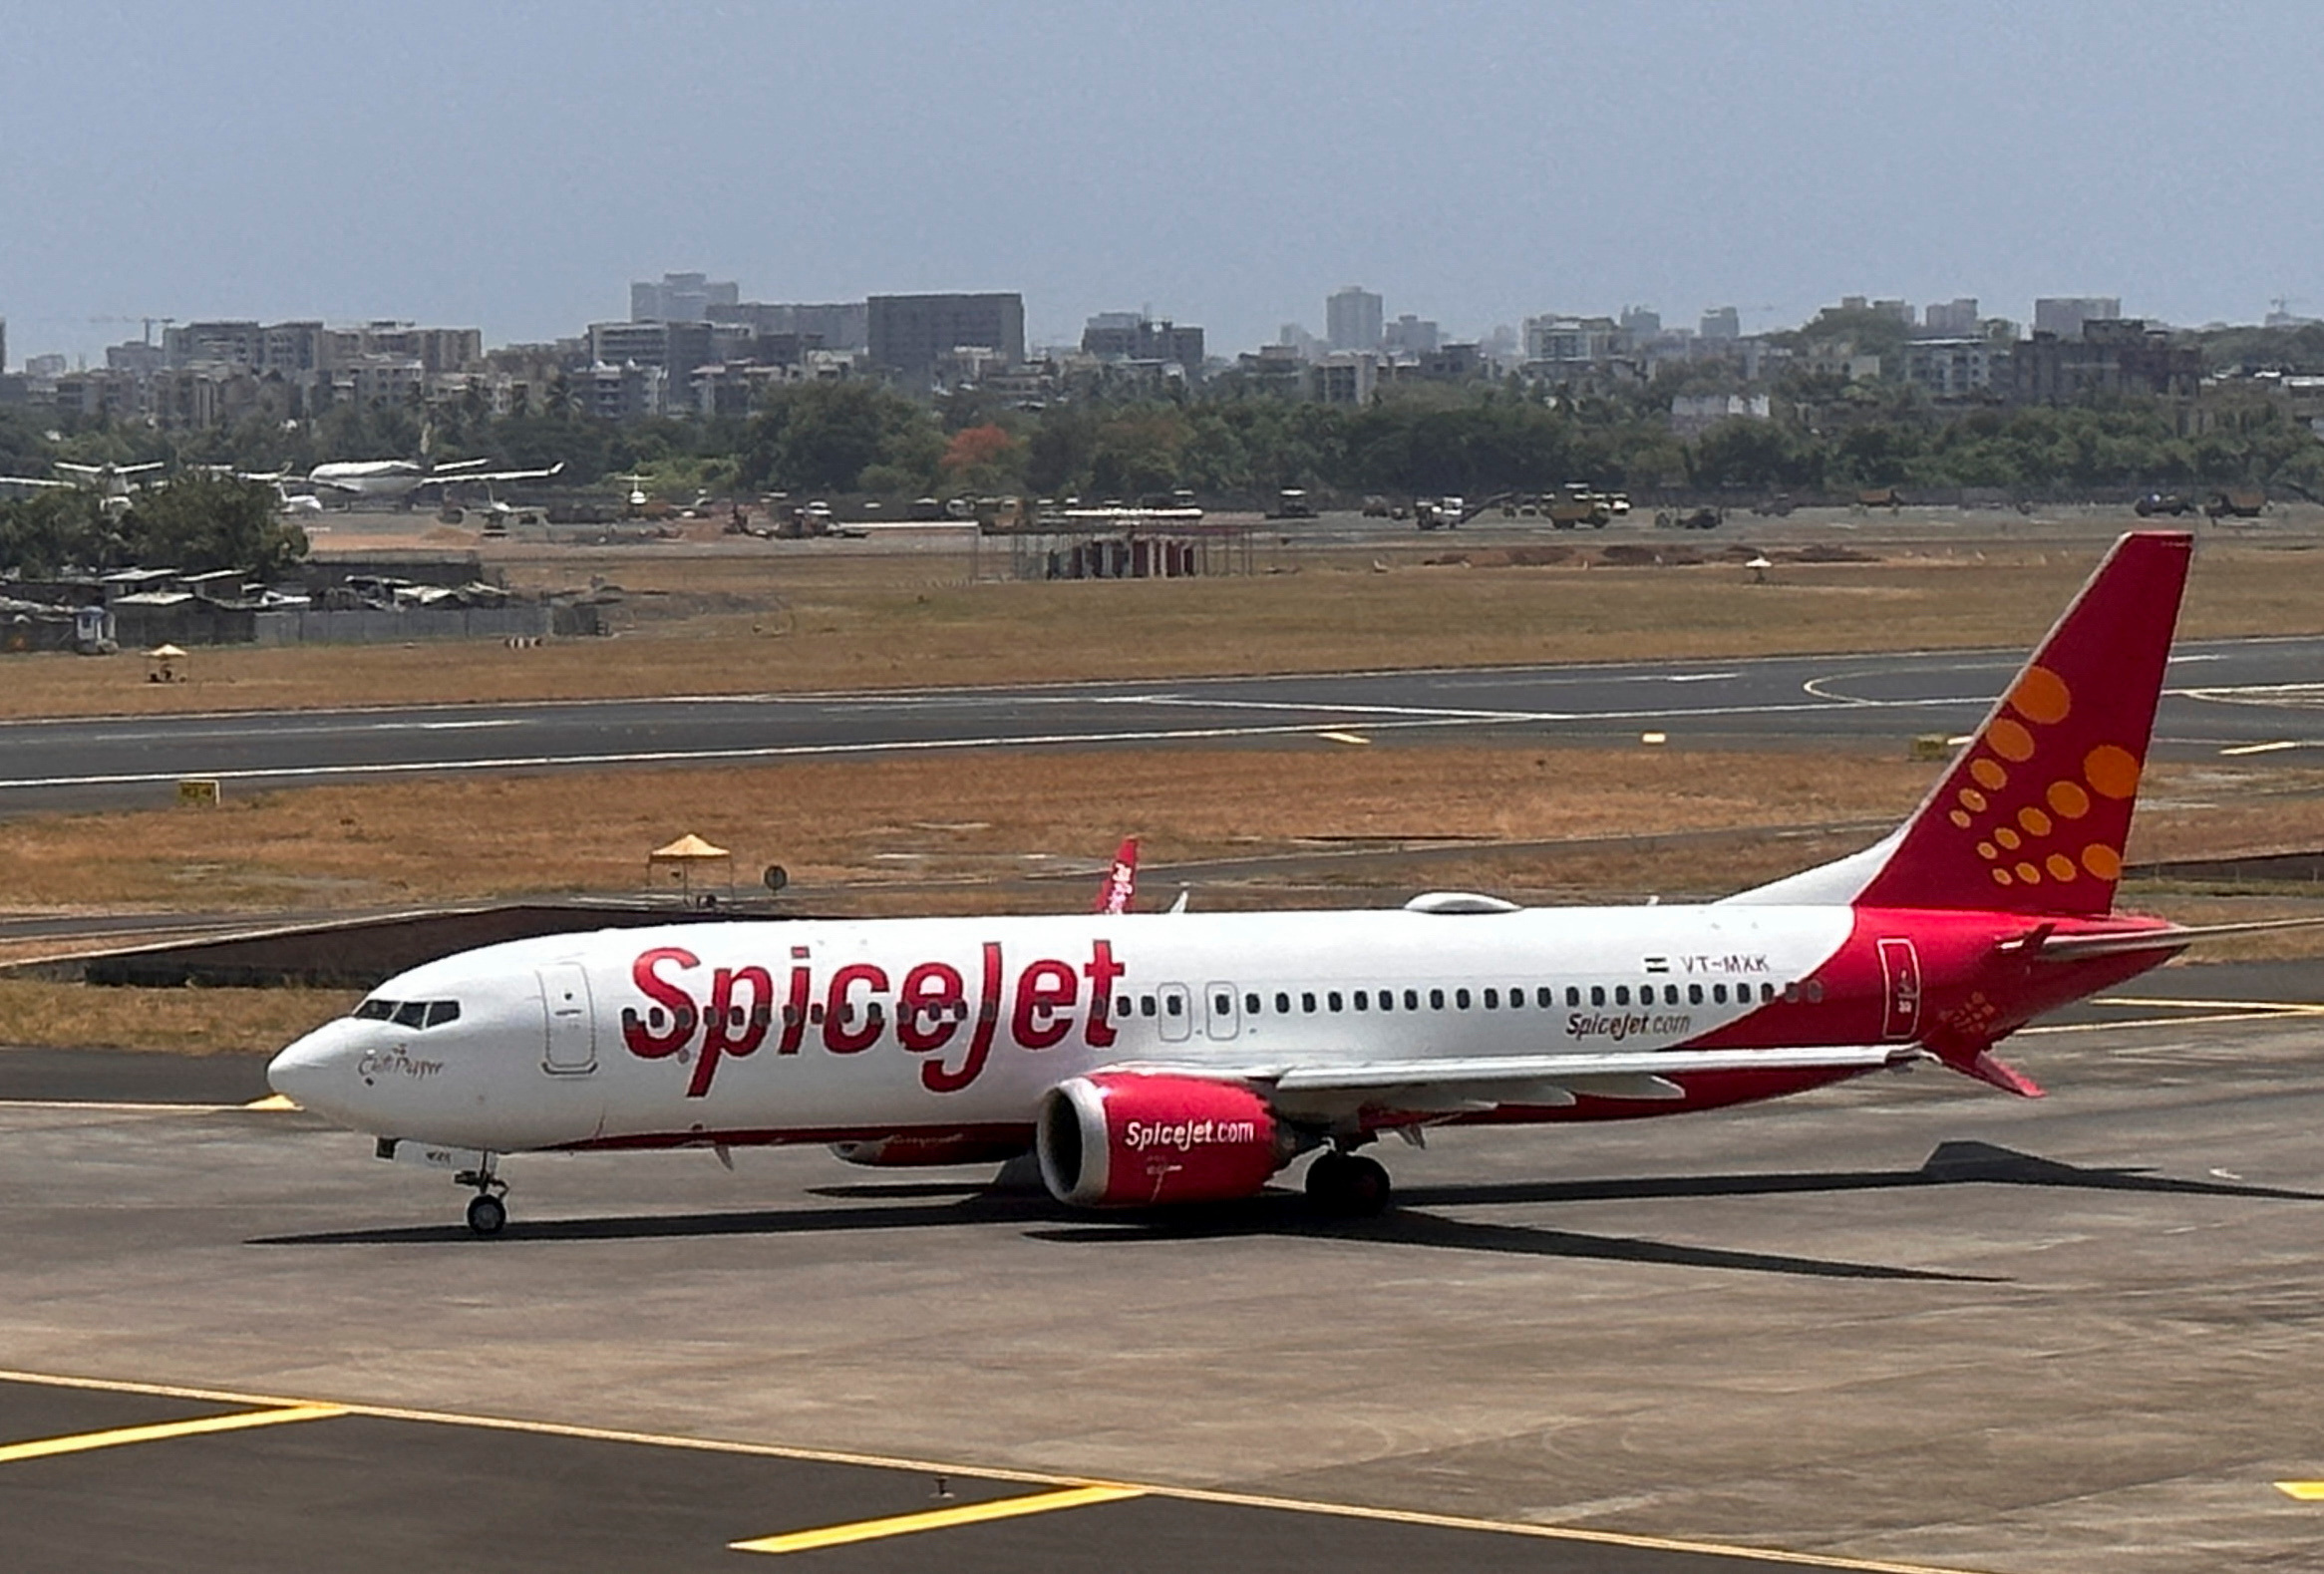 A SpiceJet passenger aircraft taxis on the tarmac at Chhatrapati Shivaji International Airport in Mumbai